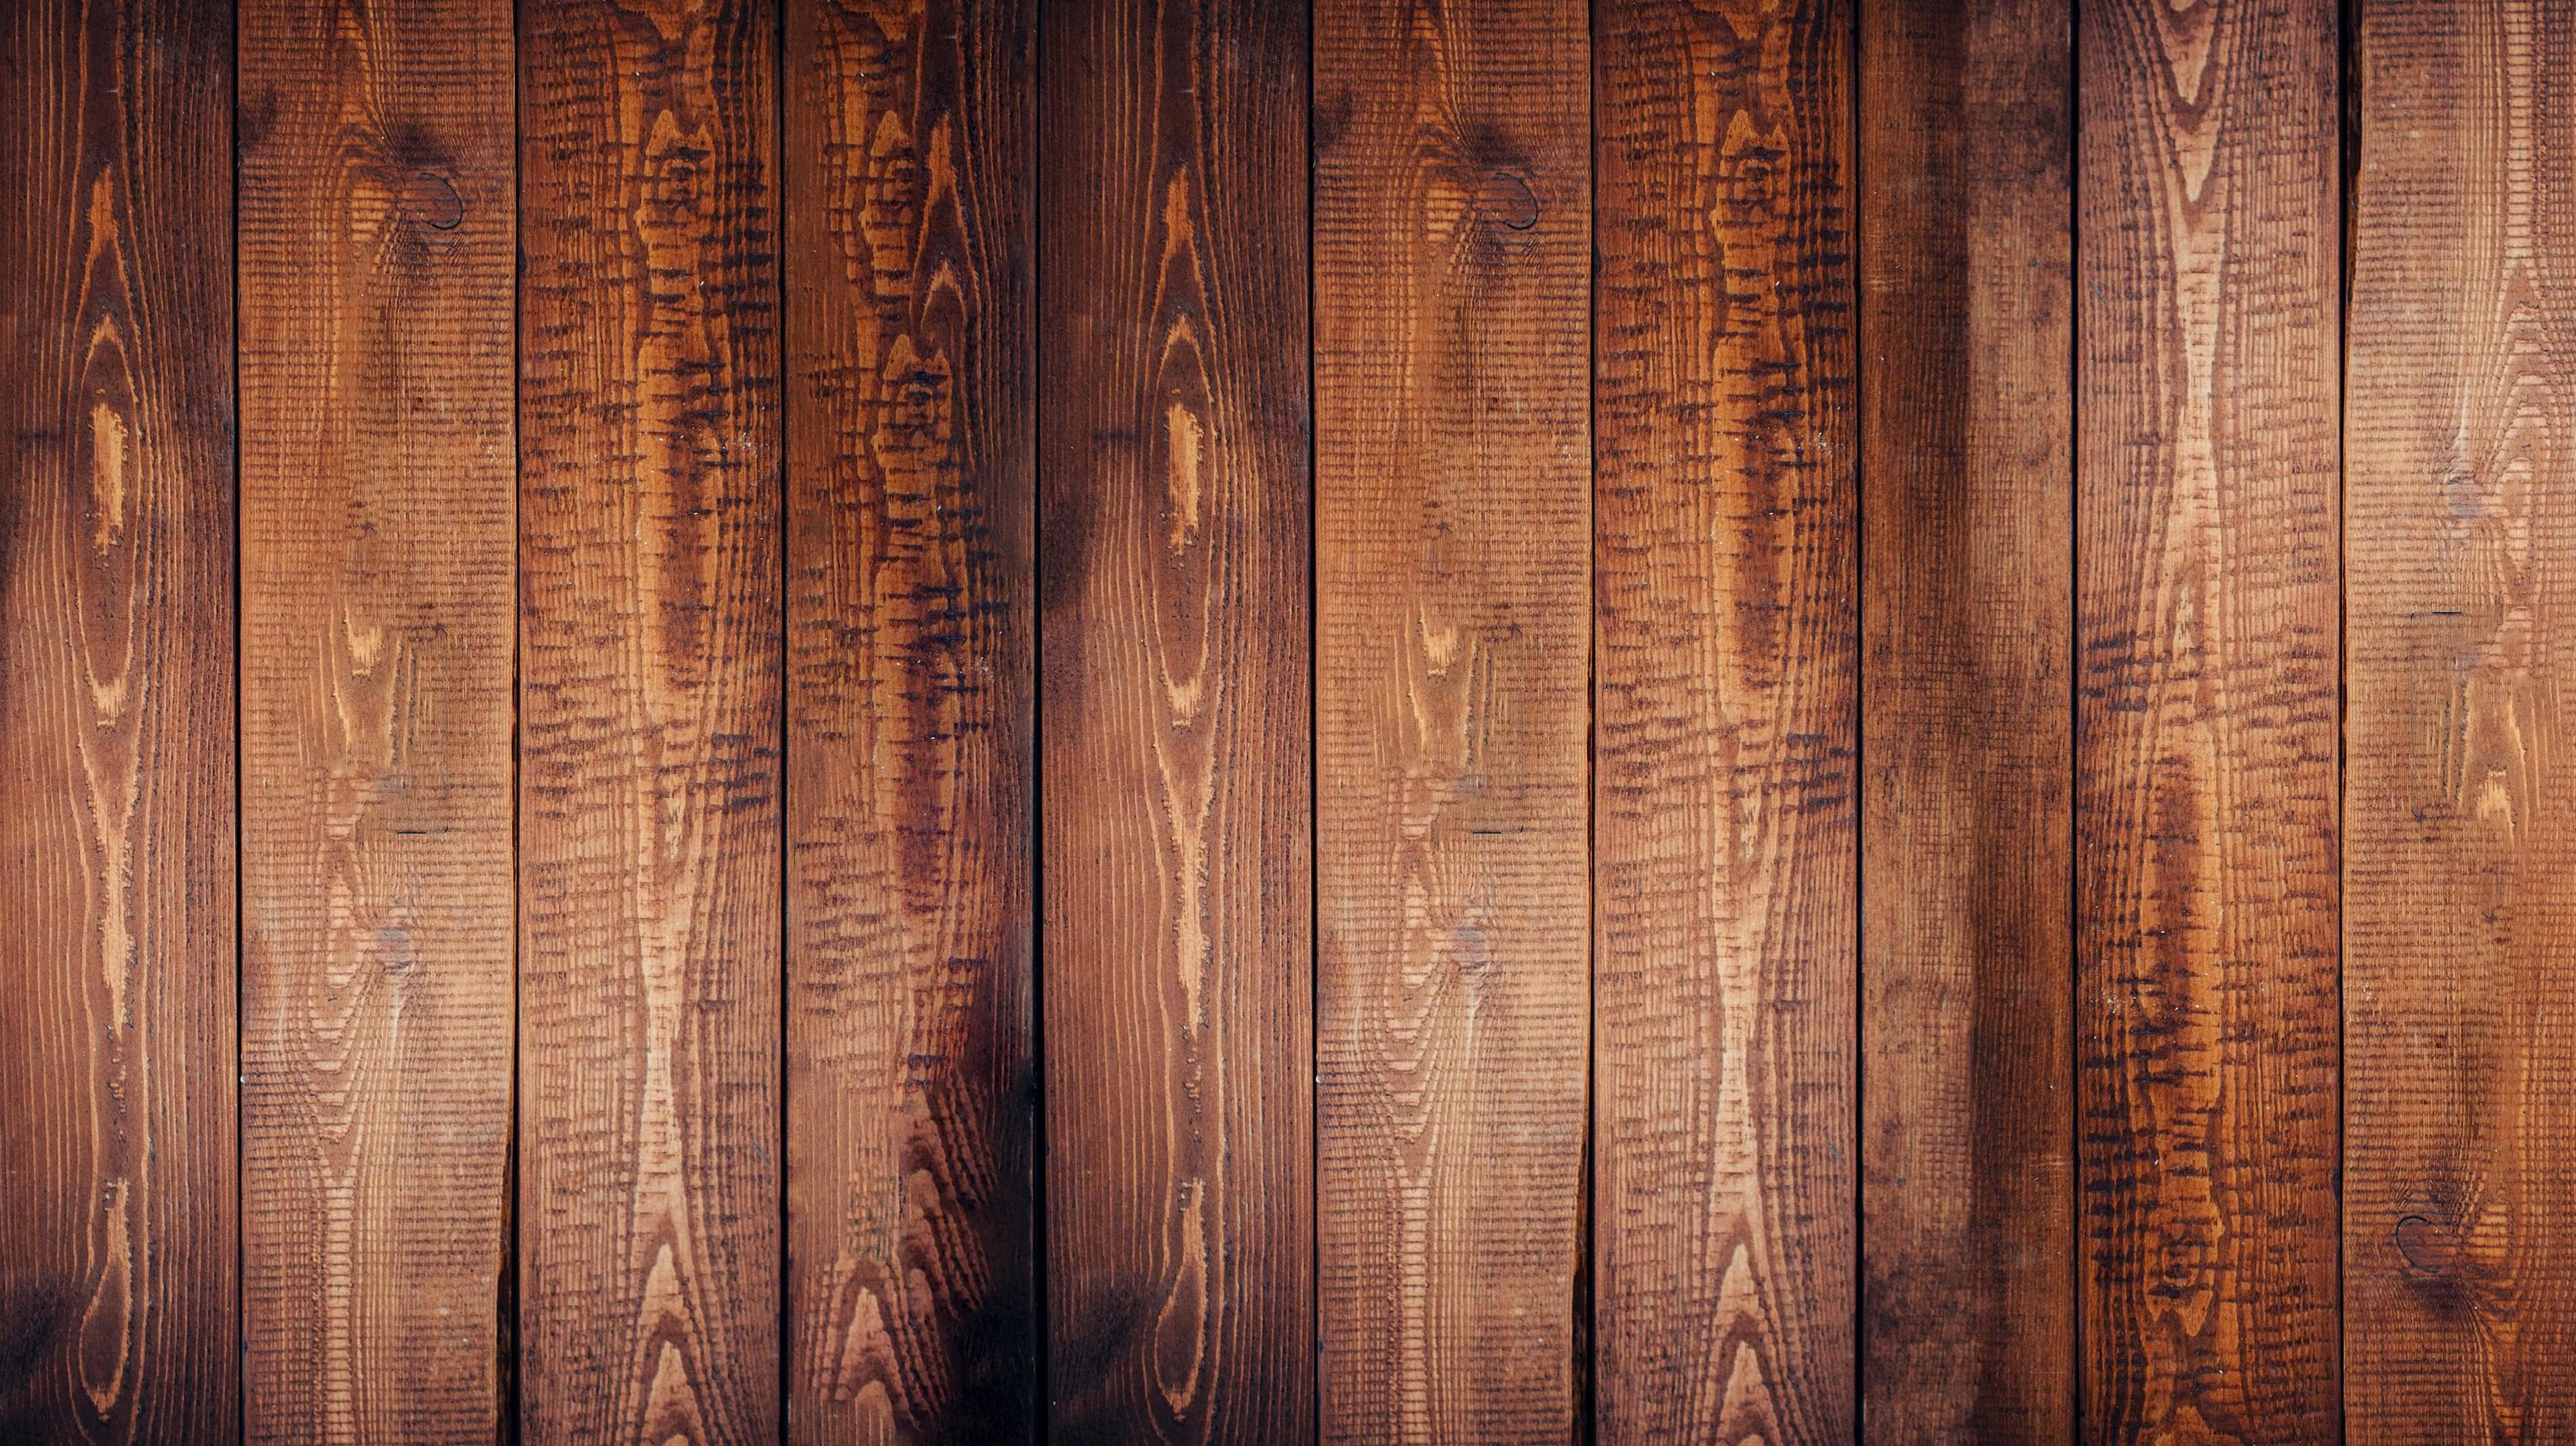 Free picture: floor, wood, hardwood floors, wooden planks, texture